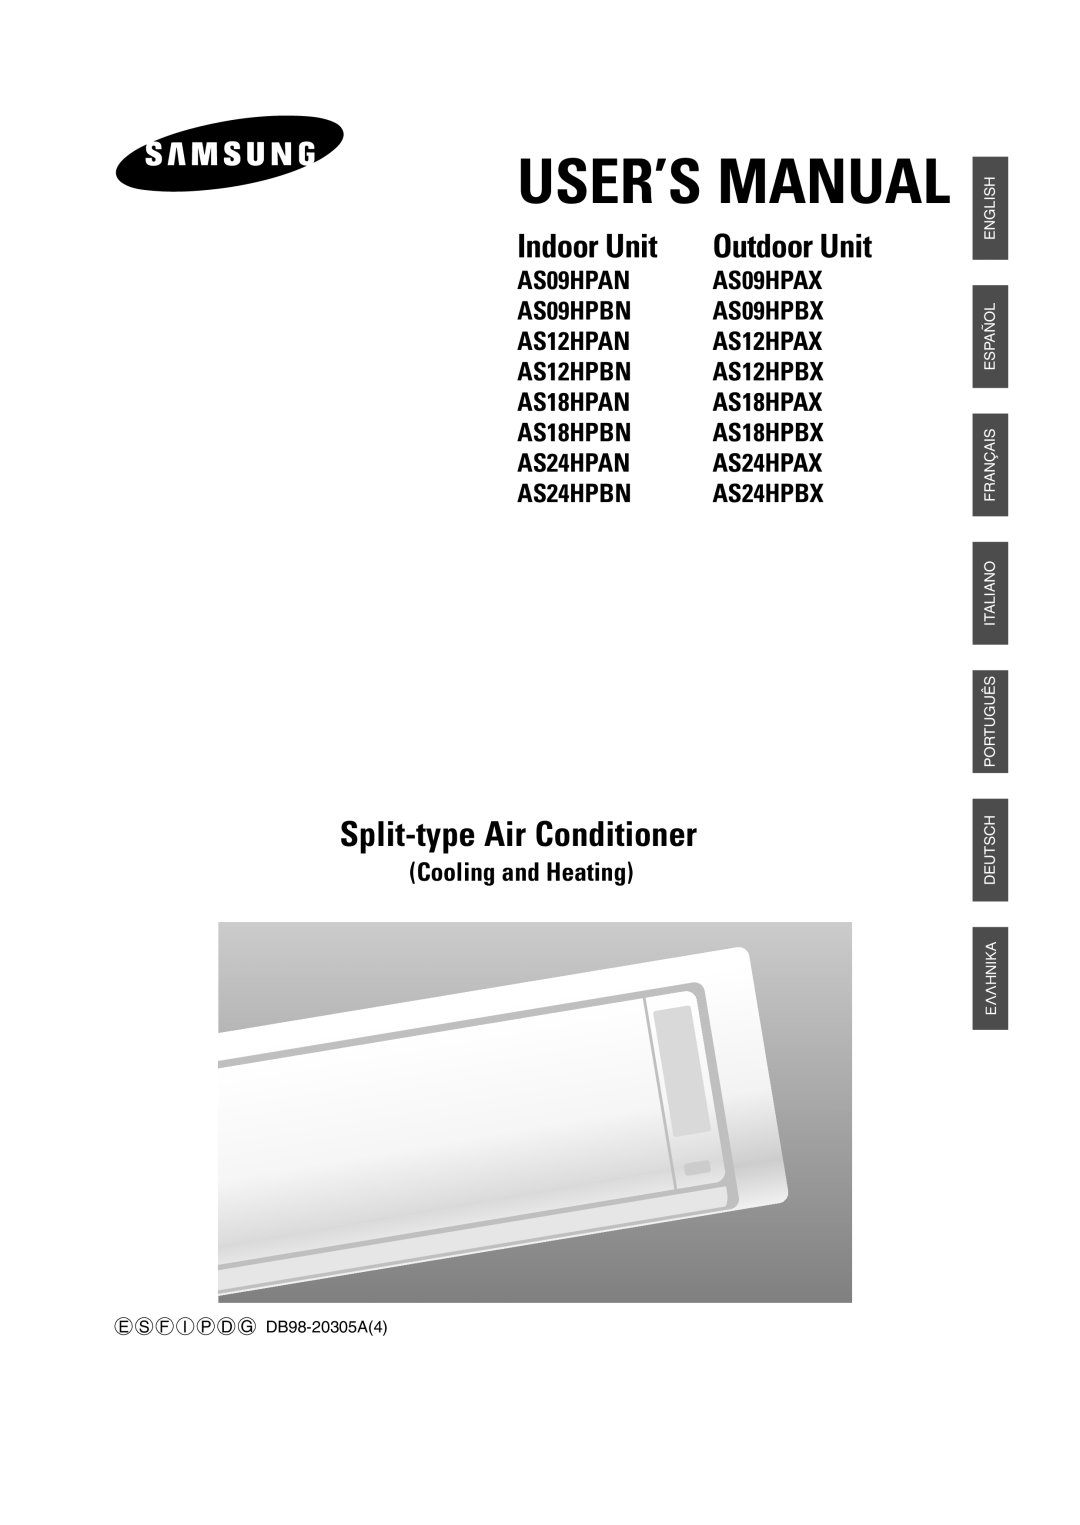 Samsung AS09HPAX, AS09HPAN, AS09HPBN, AS24HPAX, AS24HPBN, AS24HPBX, AS24HPAN user manual Split-typeAir Conditioner, Indoor Unit 